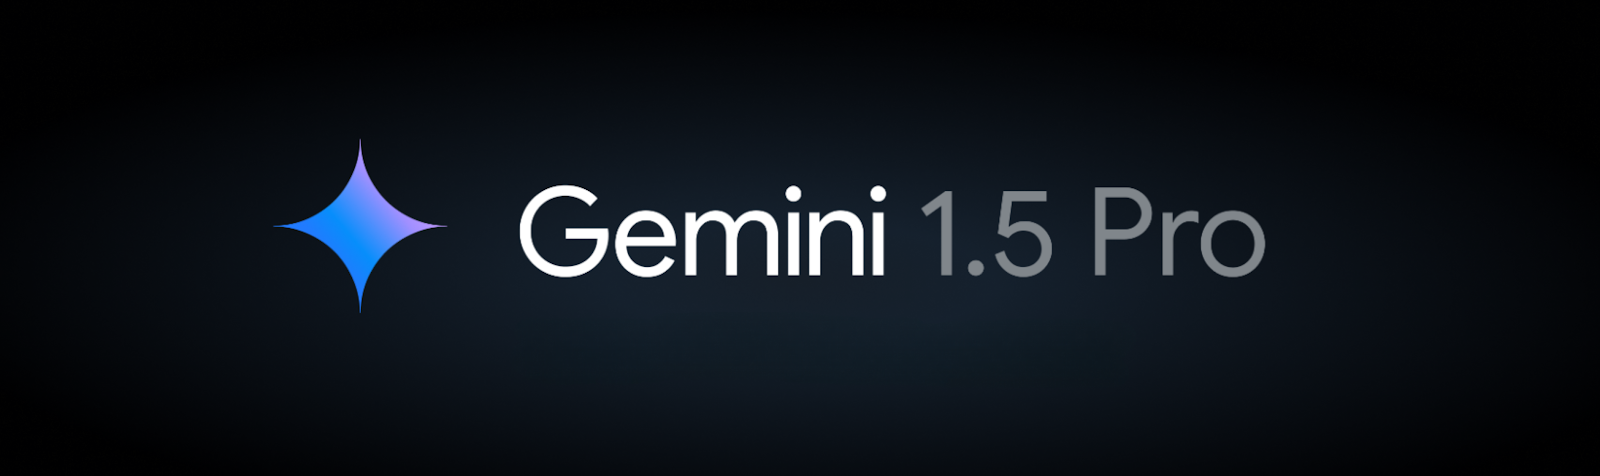 Google lanceert Gemini 1.5 Pro